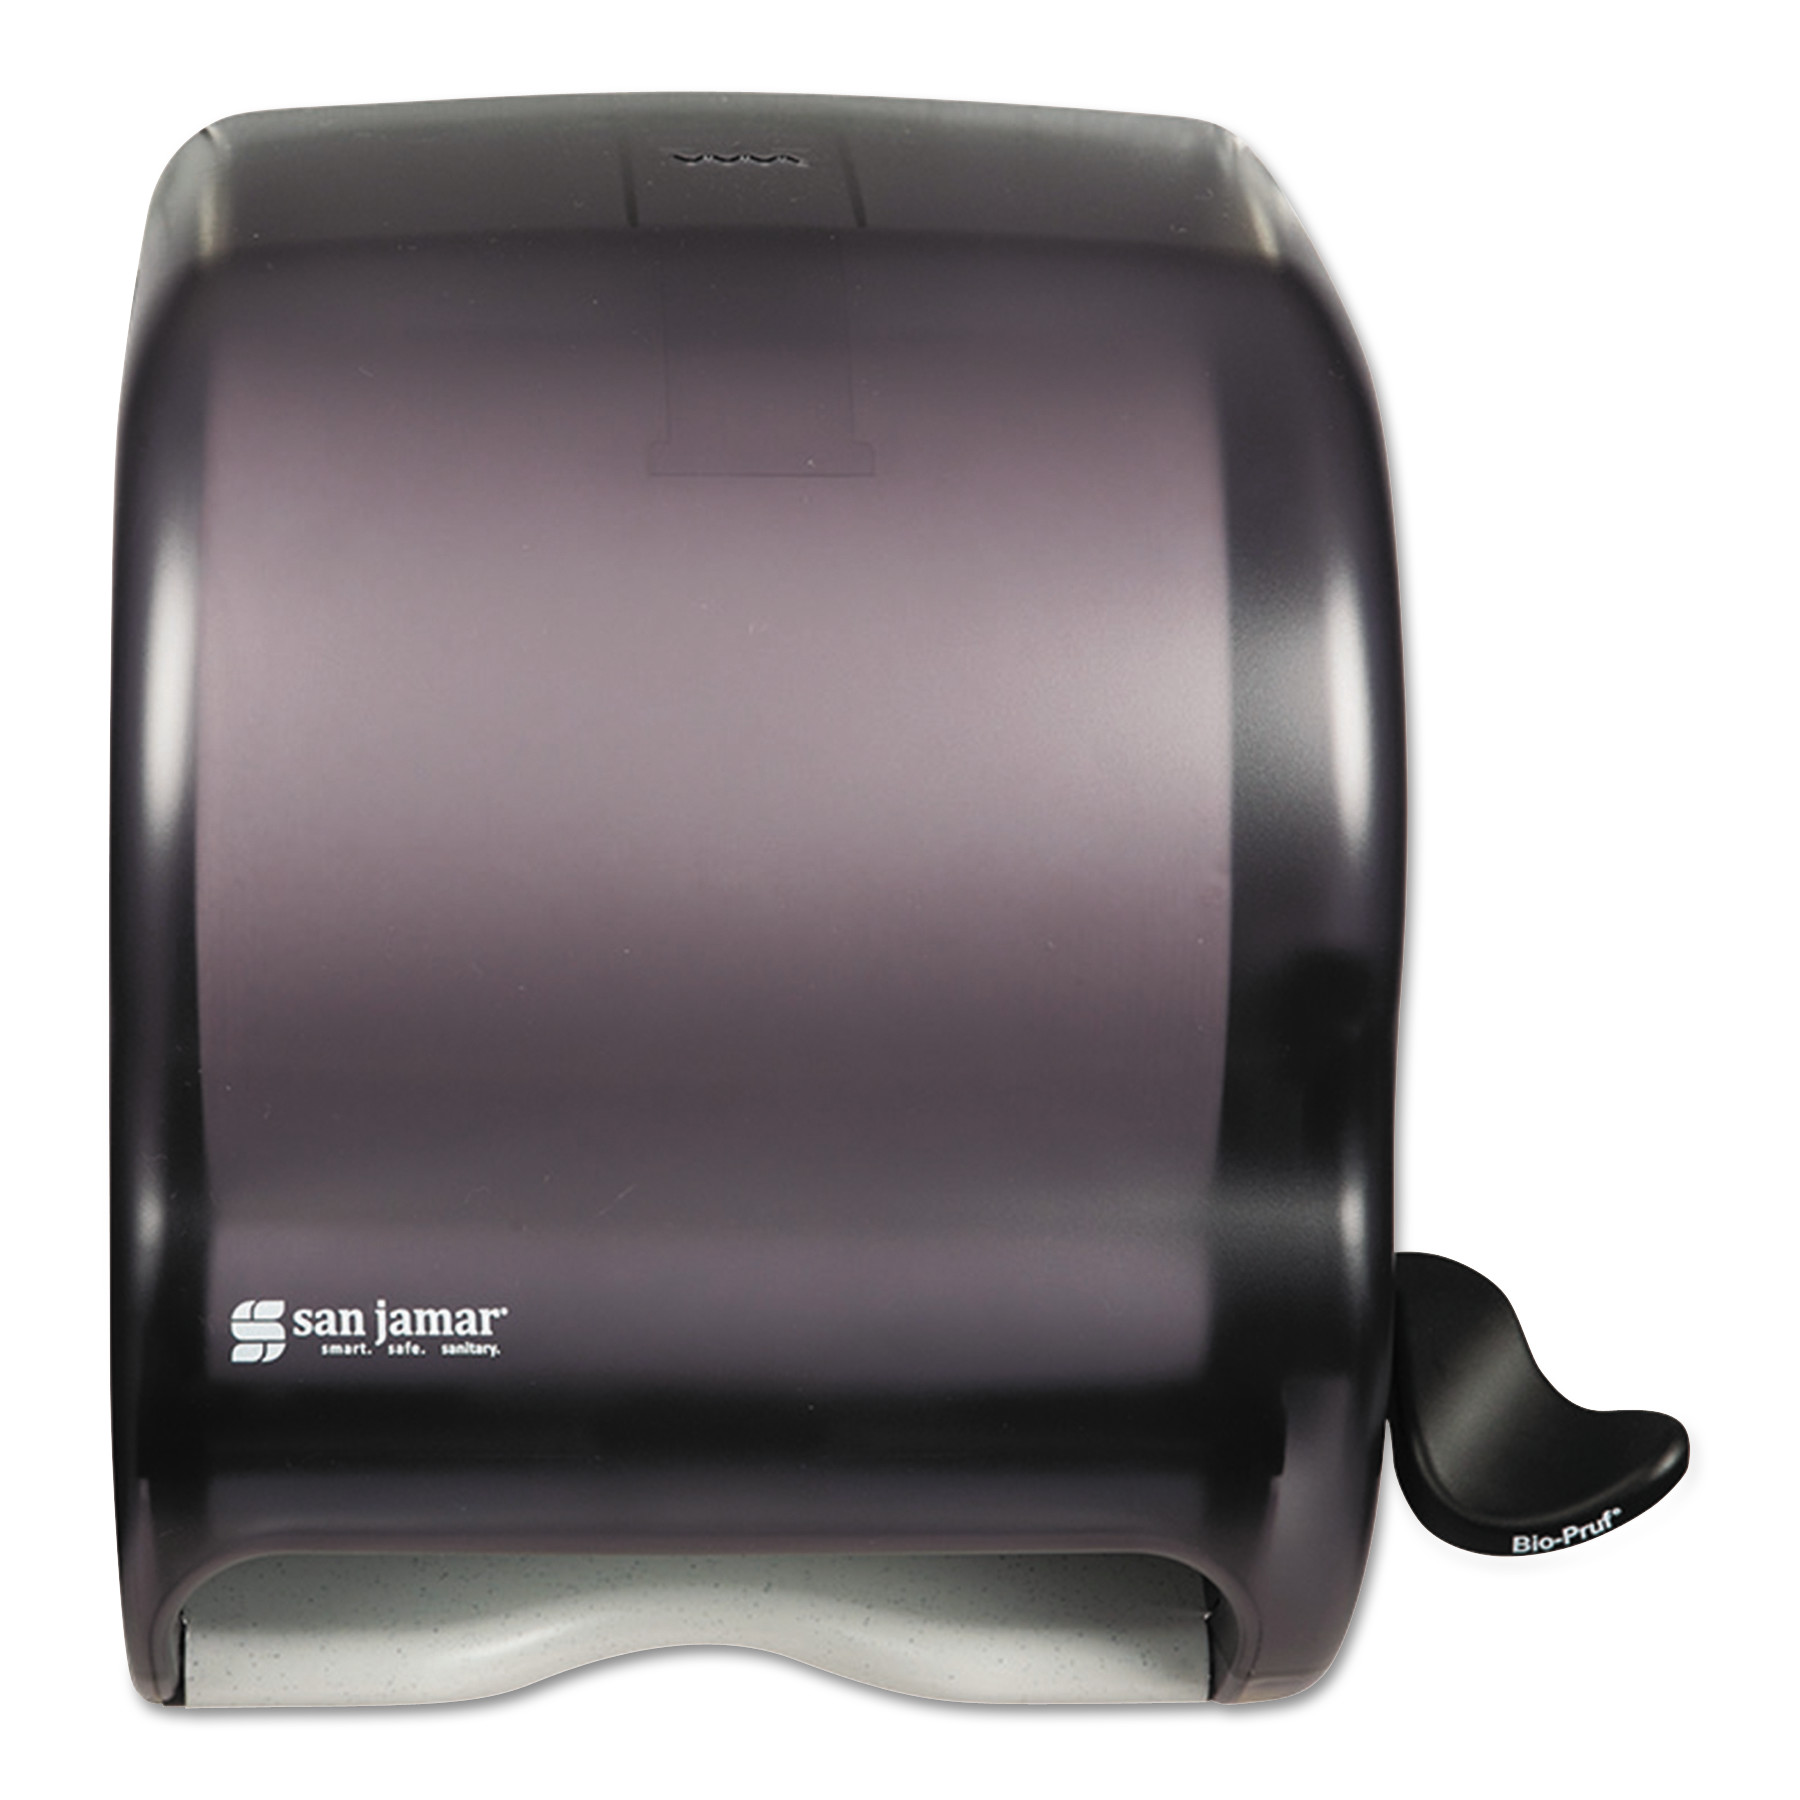 San Jamar Element Lever Roll Towel Dispenser - Classic, Black, 12.5" x 8.5" x 12.75"